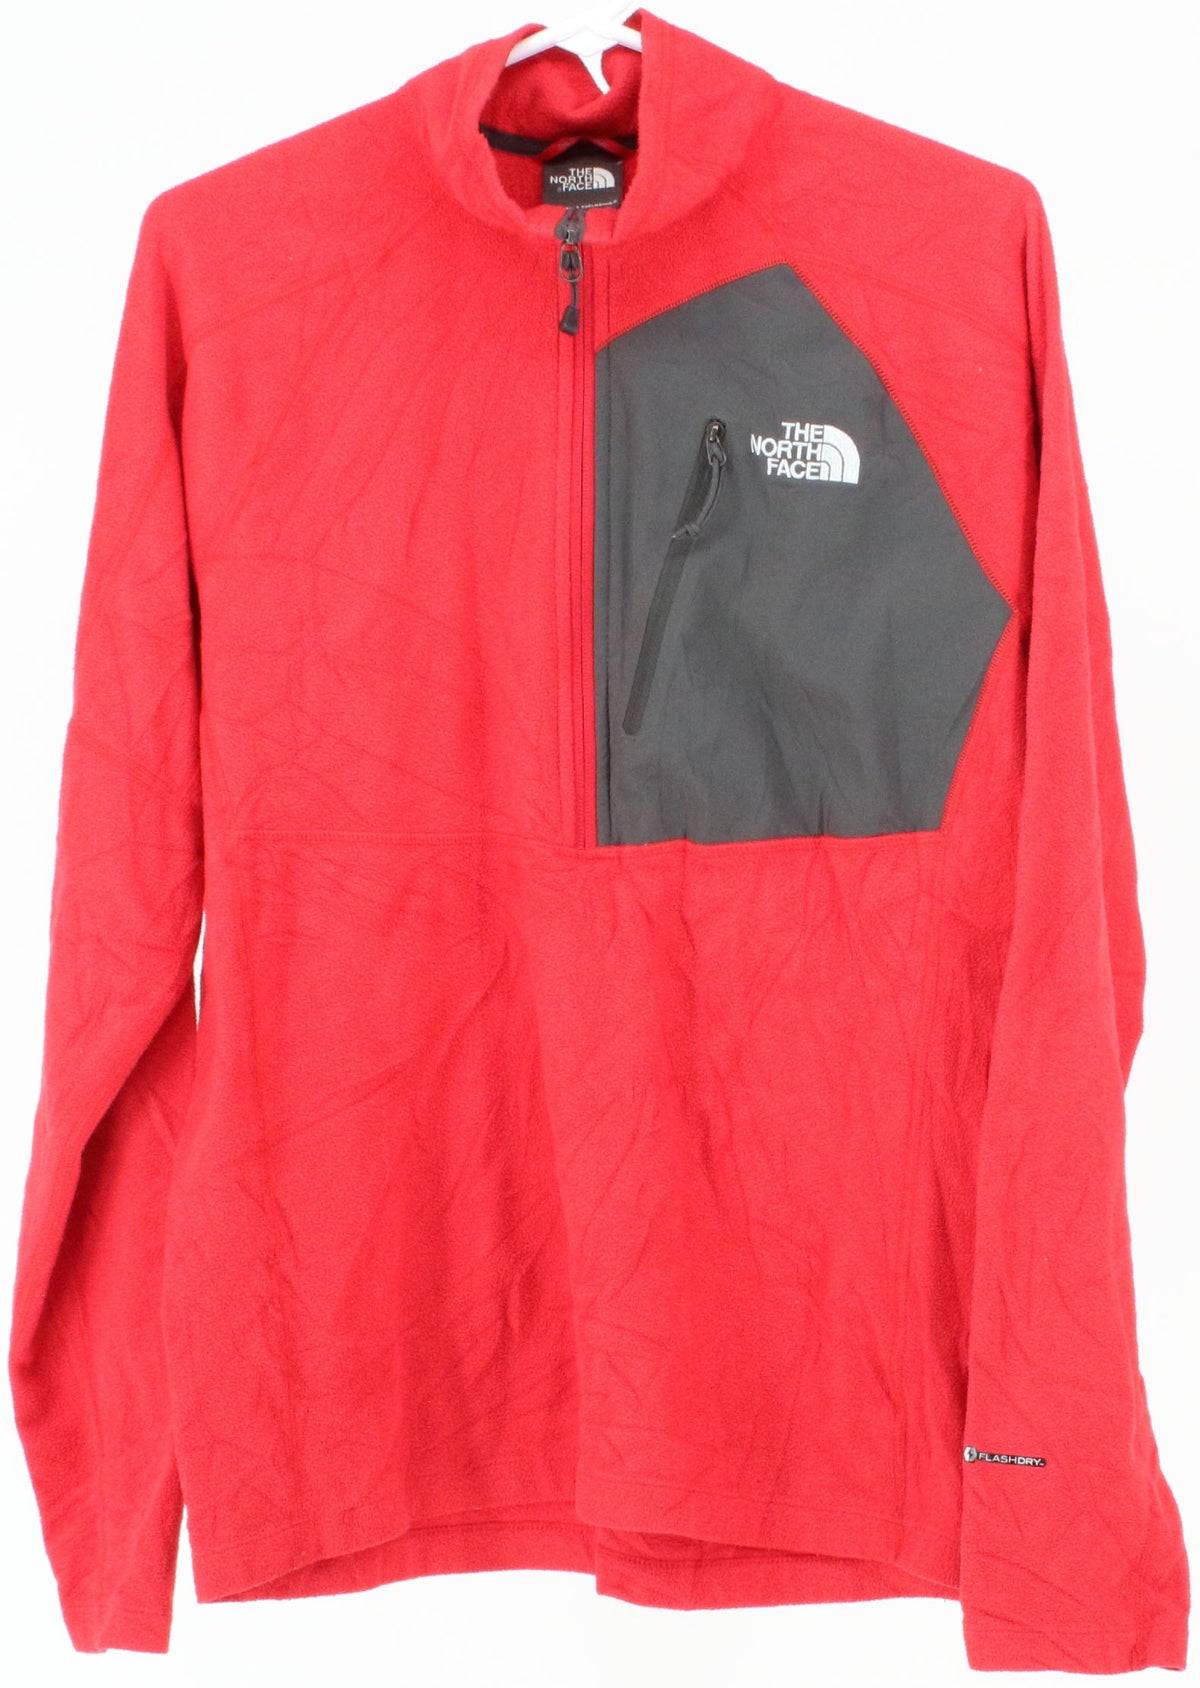 The North Face Flash Dry Red and Grey Half Zip Men's Fleece